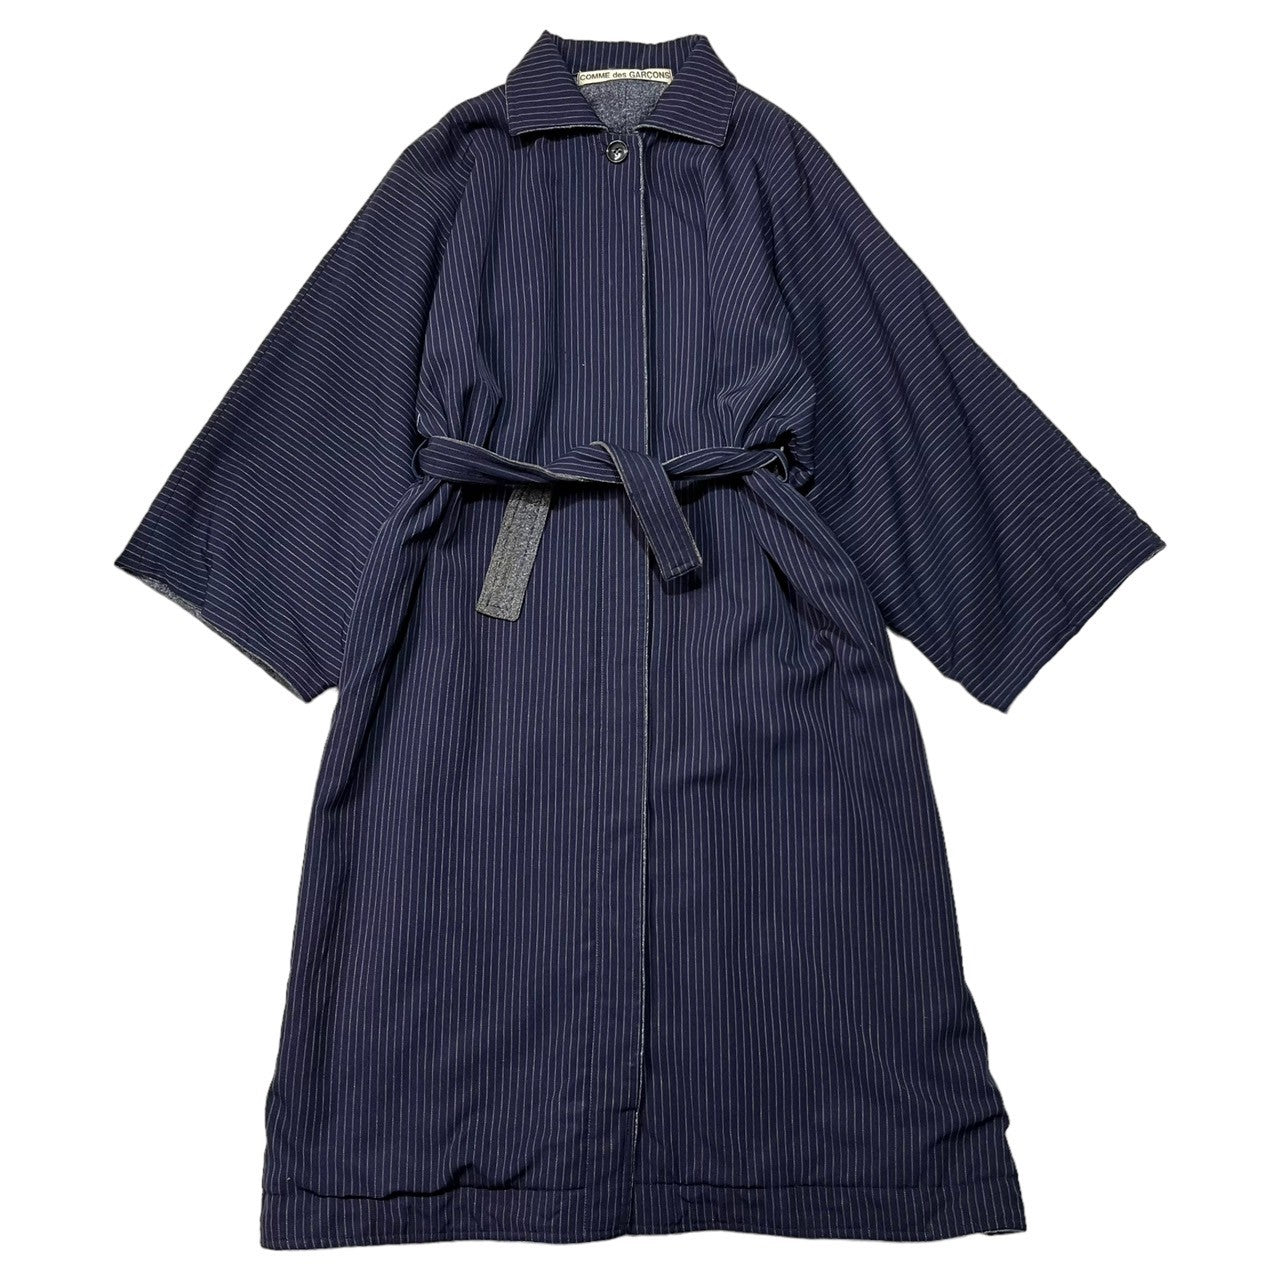 COMME des GARCONS(コムデギャルソン) 70~80's vintage kimono coat/ヴィンテージ着物コート/70年代/80年代/最初期/川久保玲 SIZE FREE ネイビー×グレー AD表記無し 稀少品